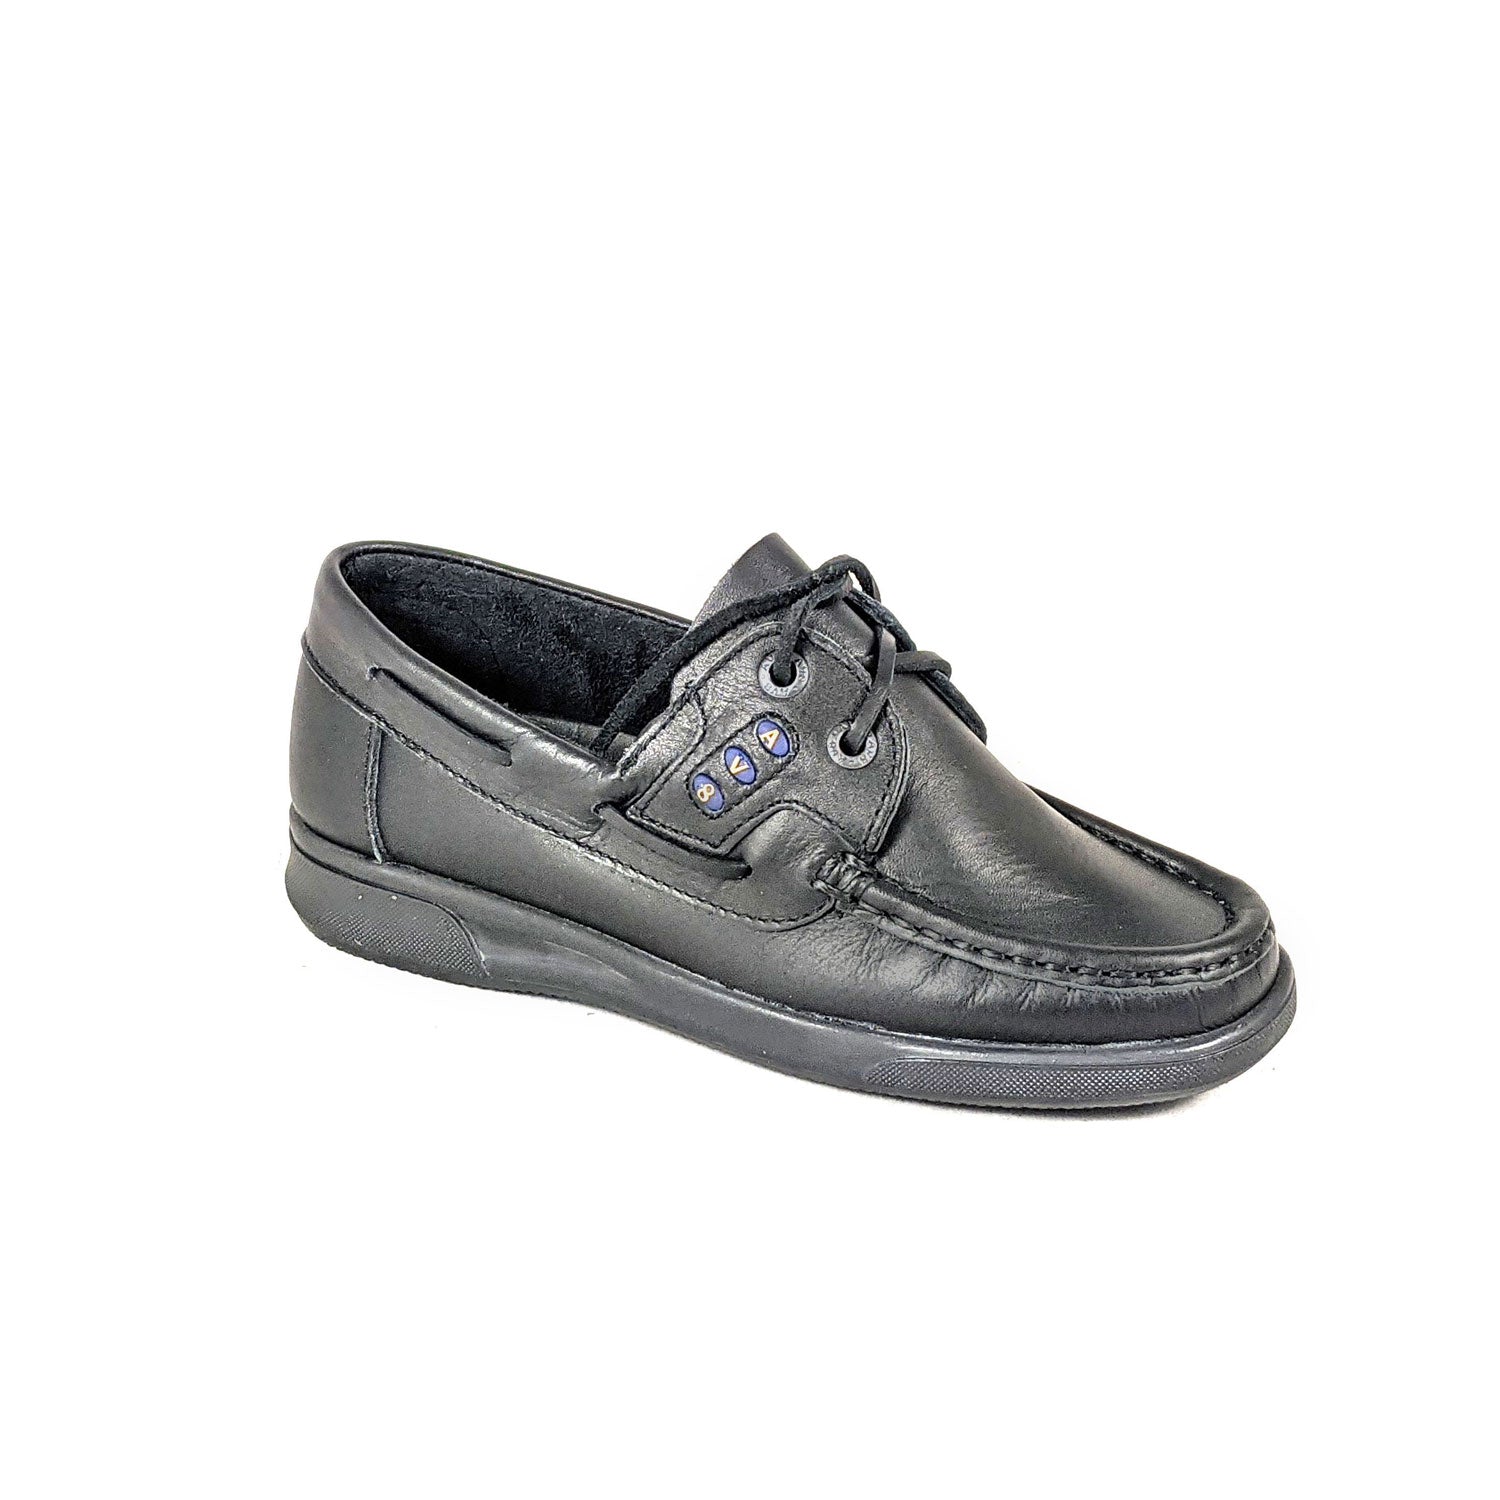 Dubarry Kapley Laced Av8 Shoe - Black 4 Shaws Department Stores